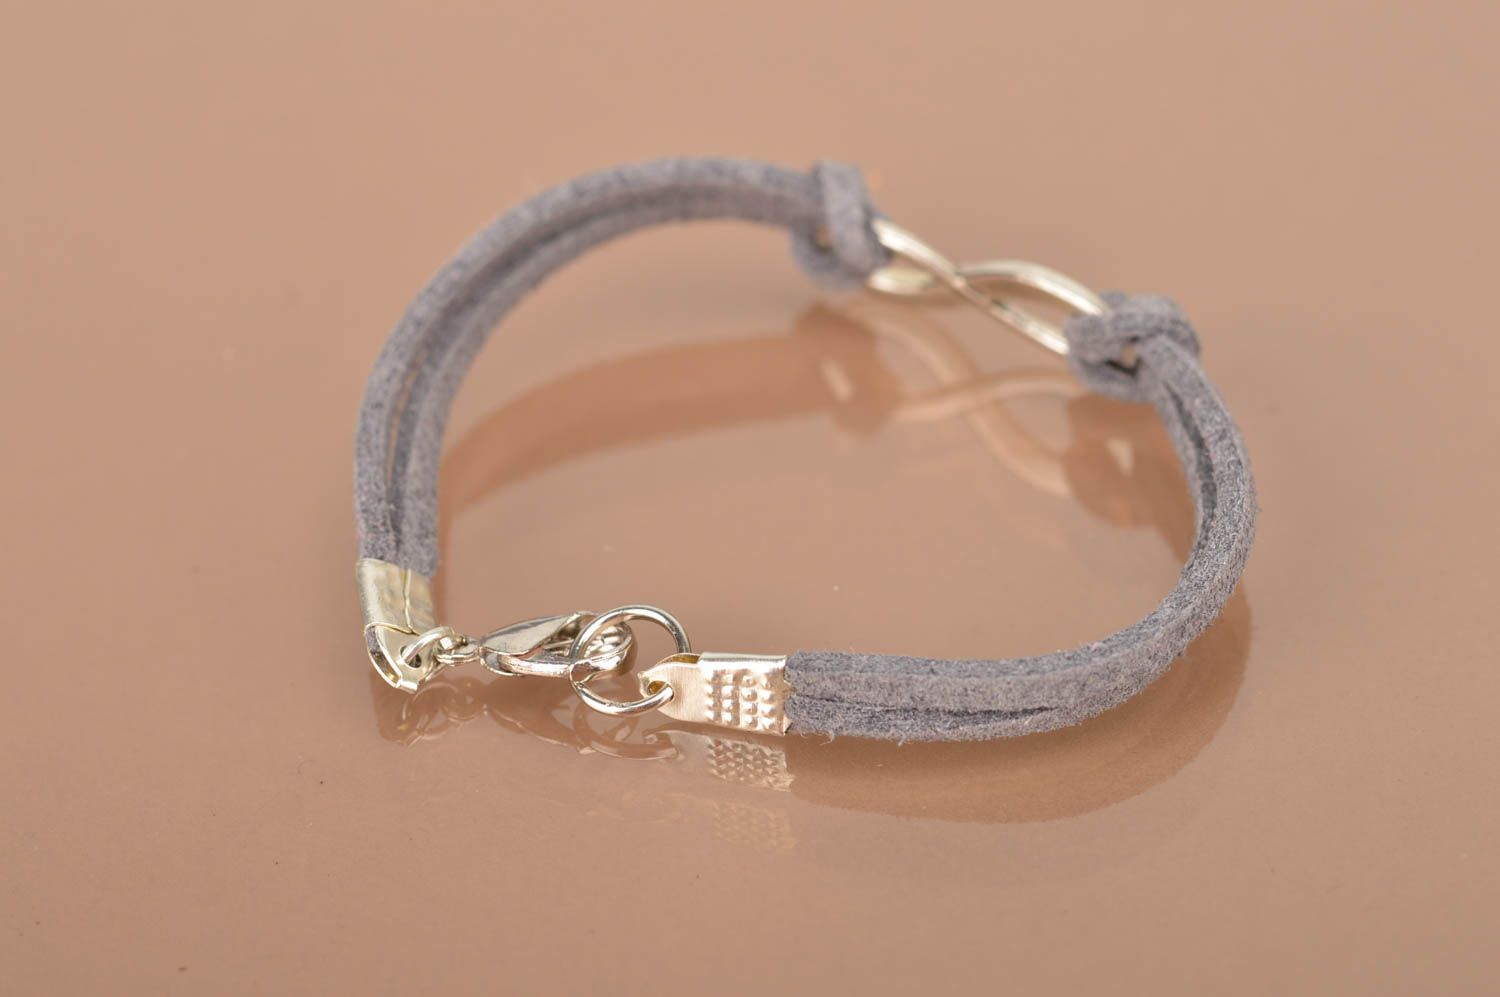 Stylish handmade suede cord bracelet wrist bracelet designs gifts for her photo 3